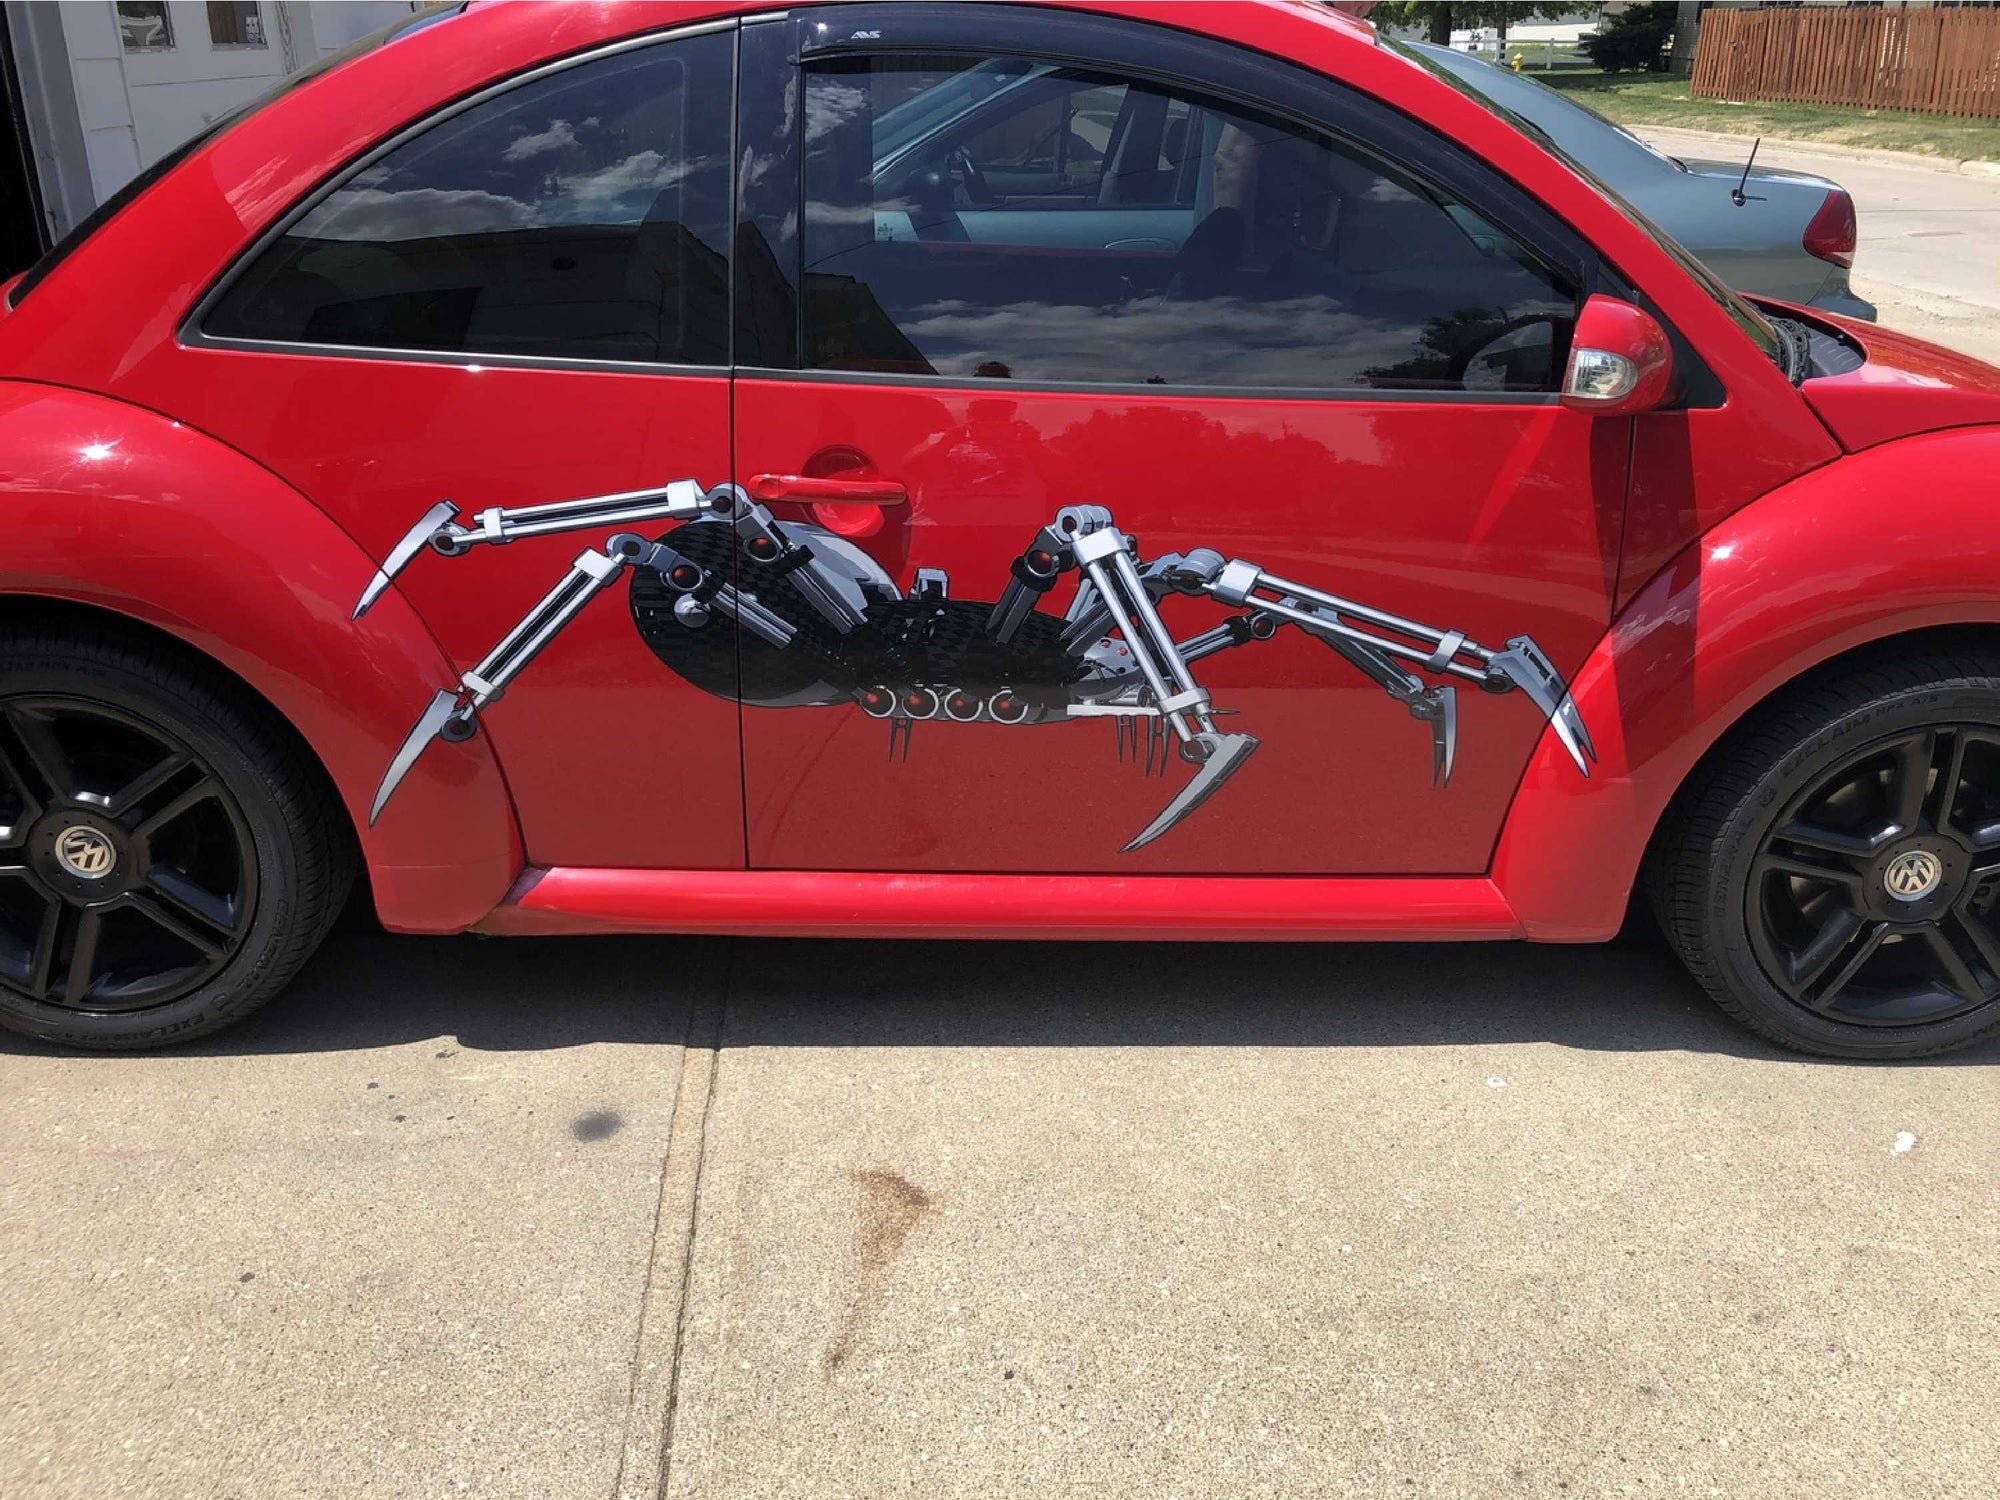 Robot spider vinyl graphics on red Volkswagon Beetle